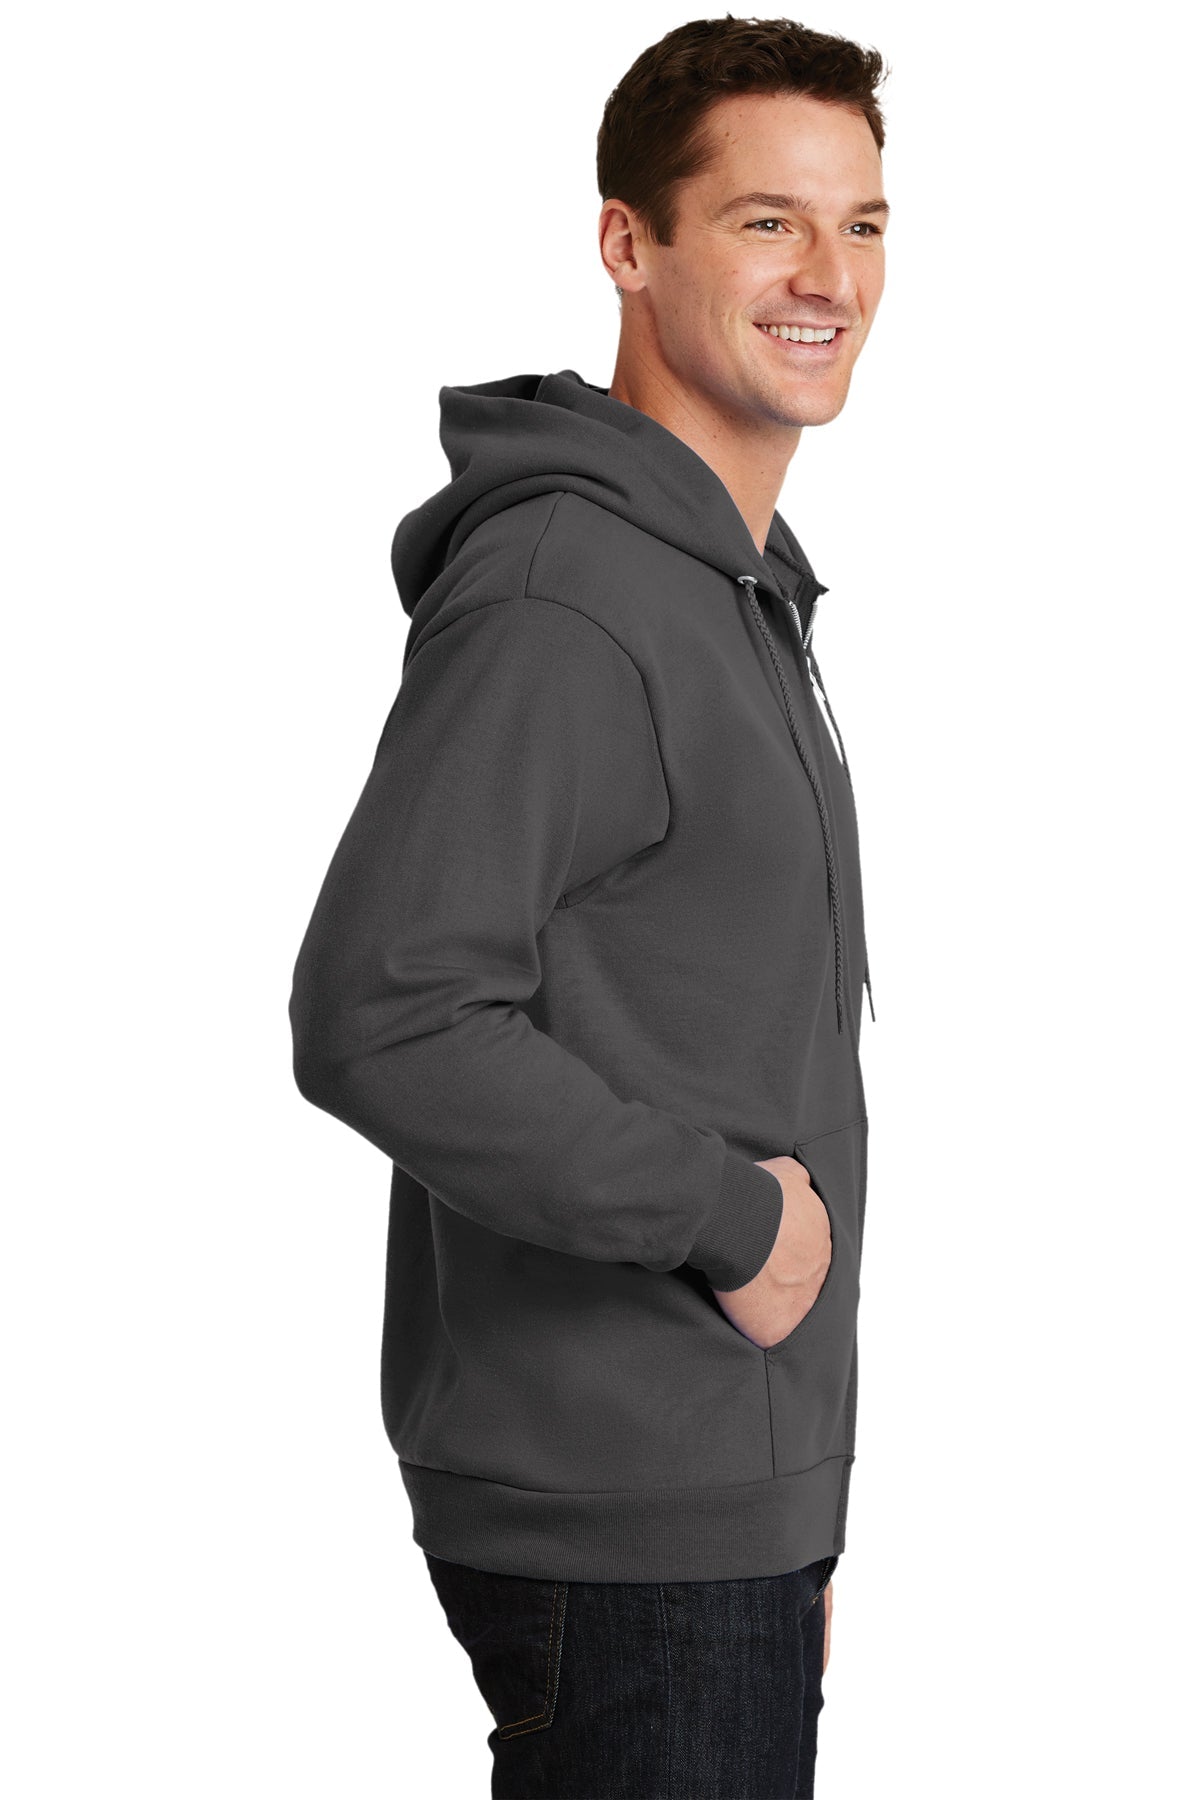 Port & Company Tall Essential Fleece Zip Customized Hoodies, Charcoal